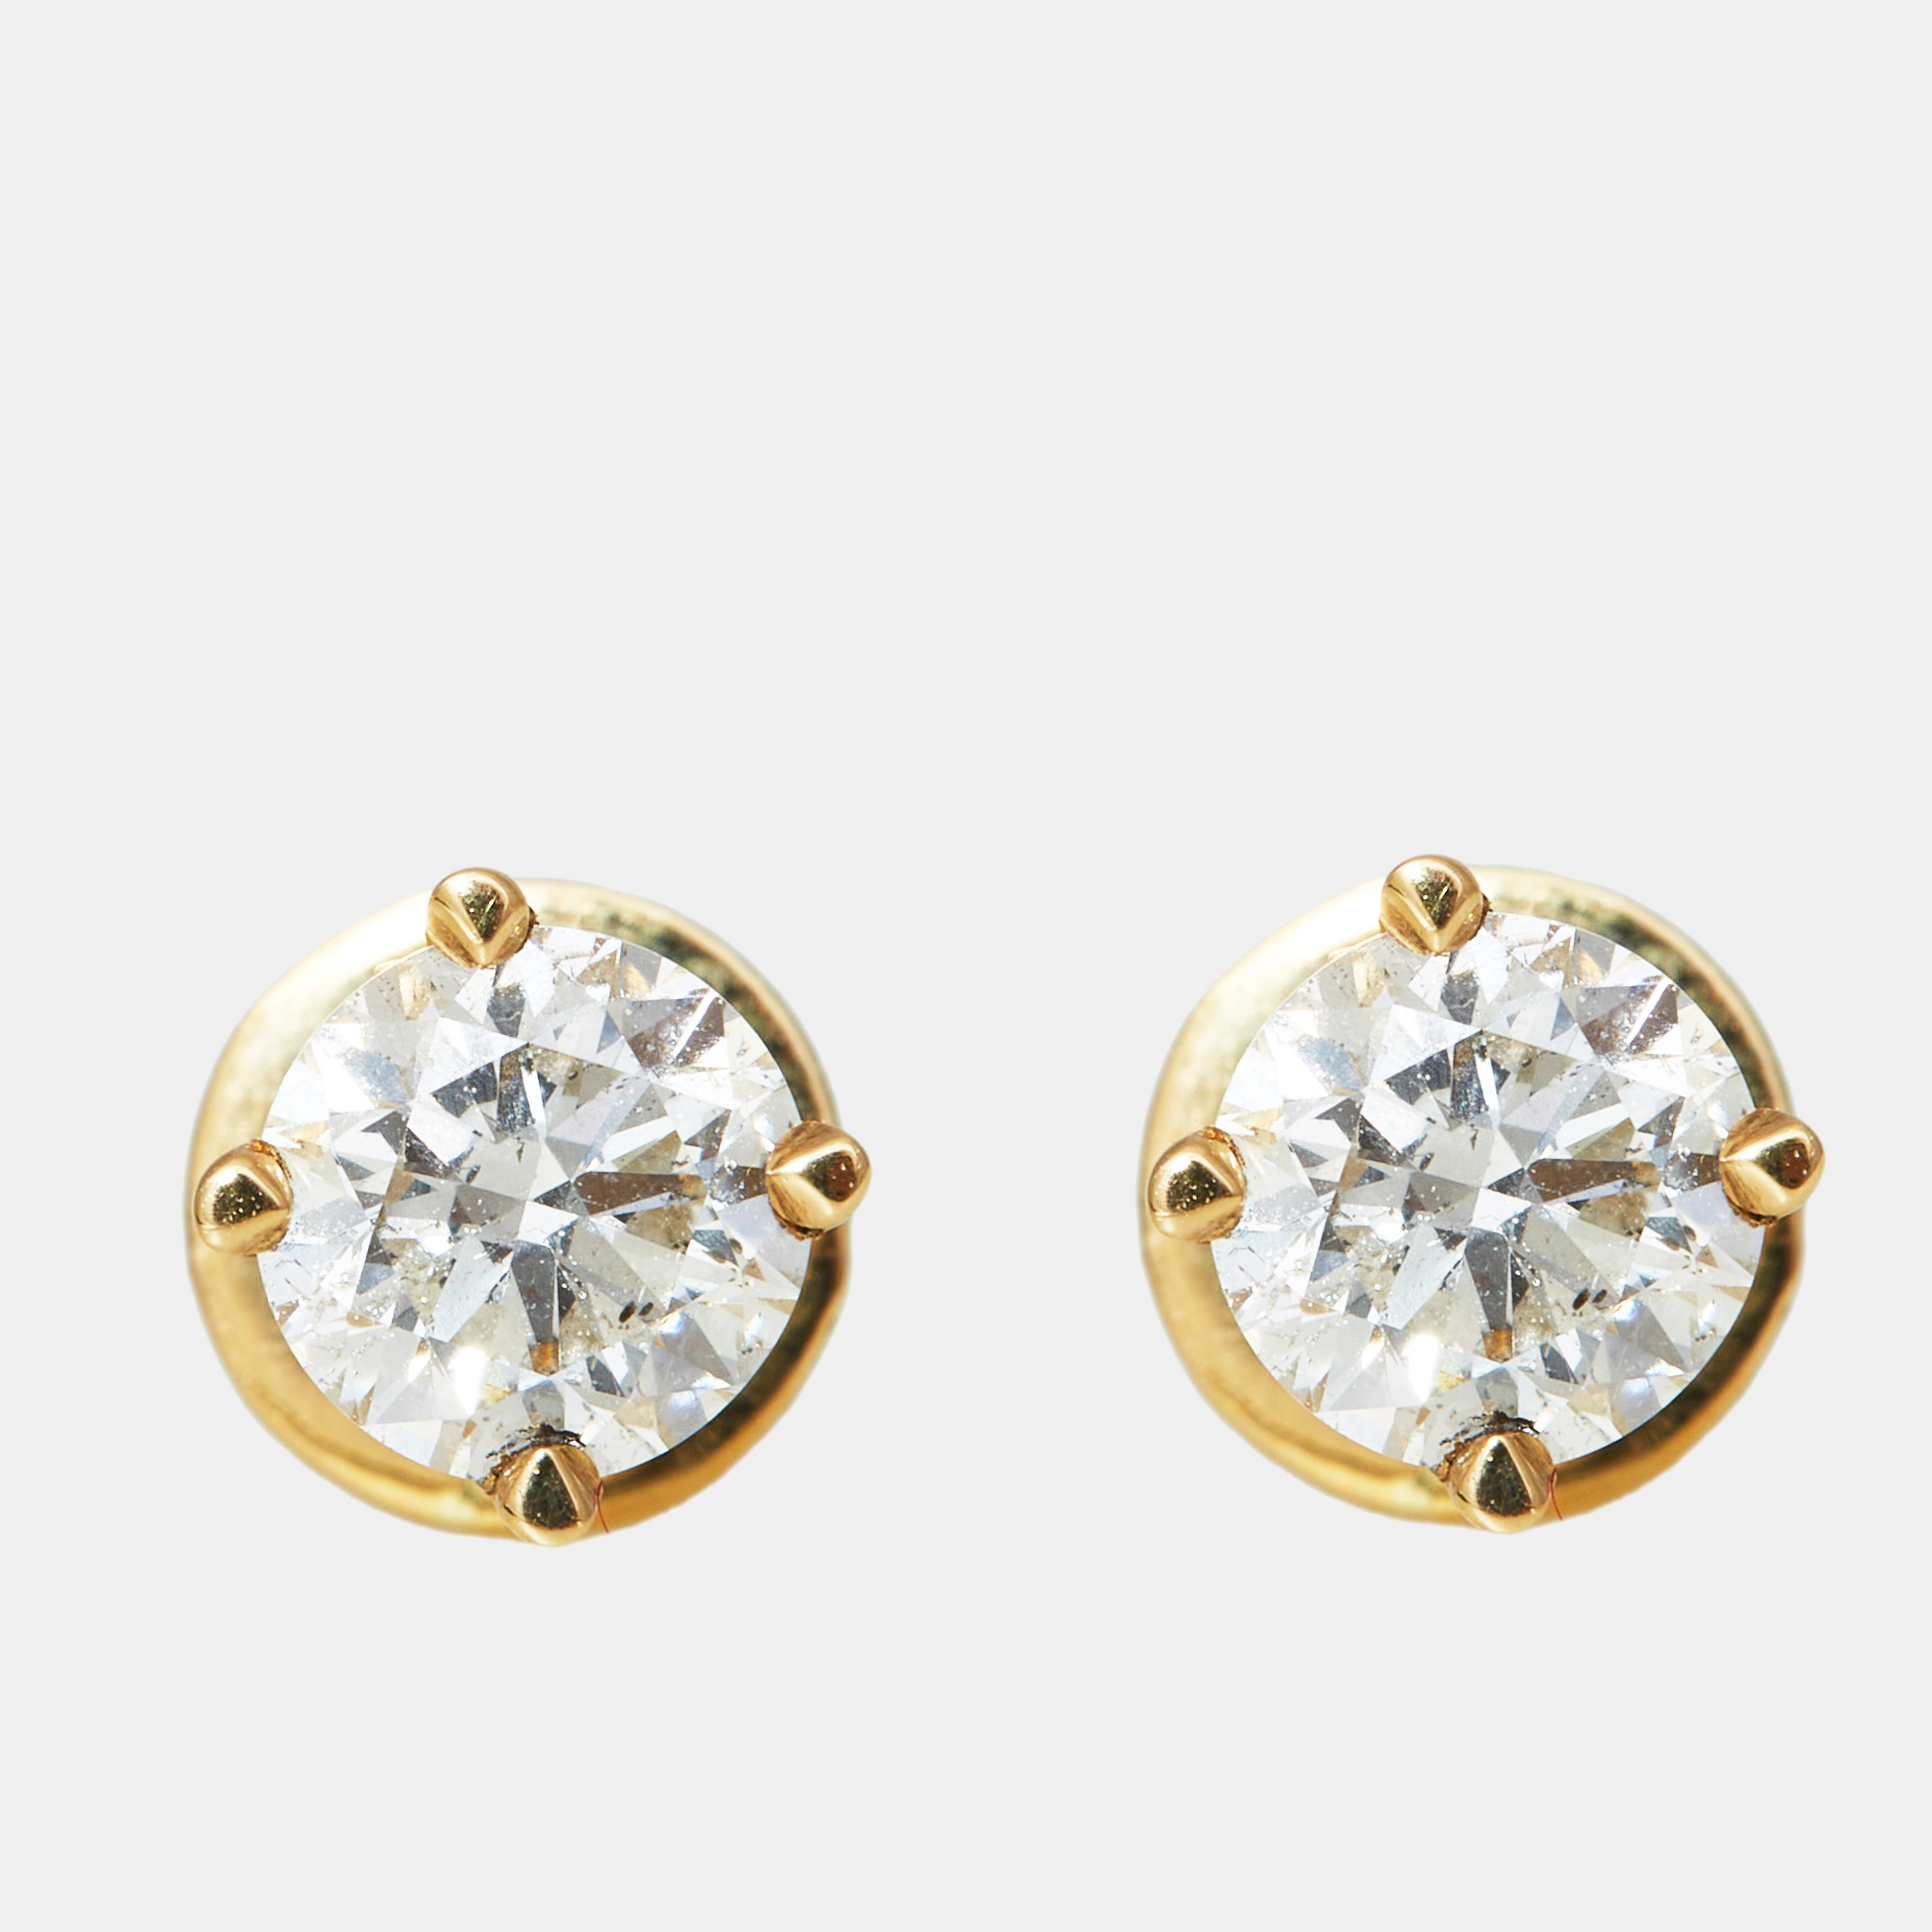 The diamond edit 18k yellow gold 1.42 ct diamond earrings